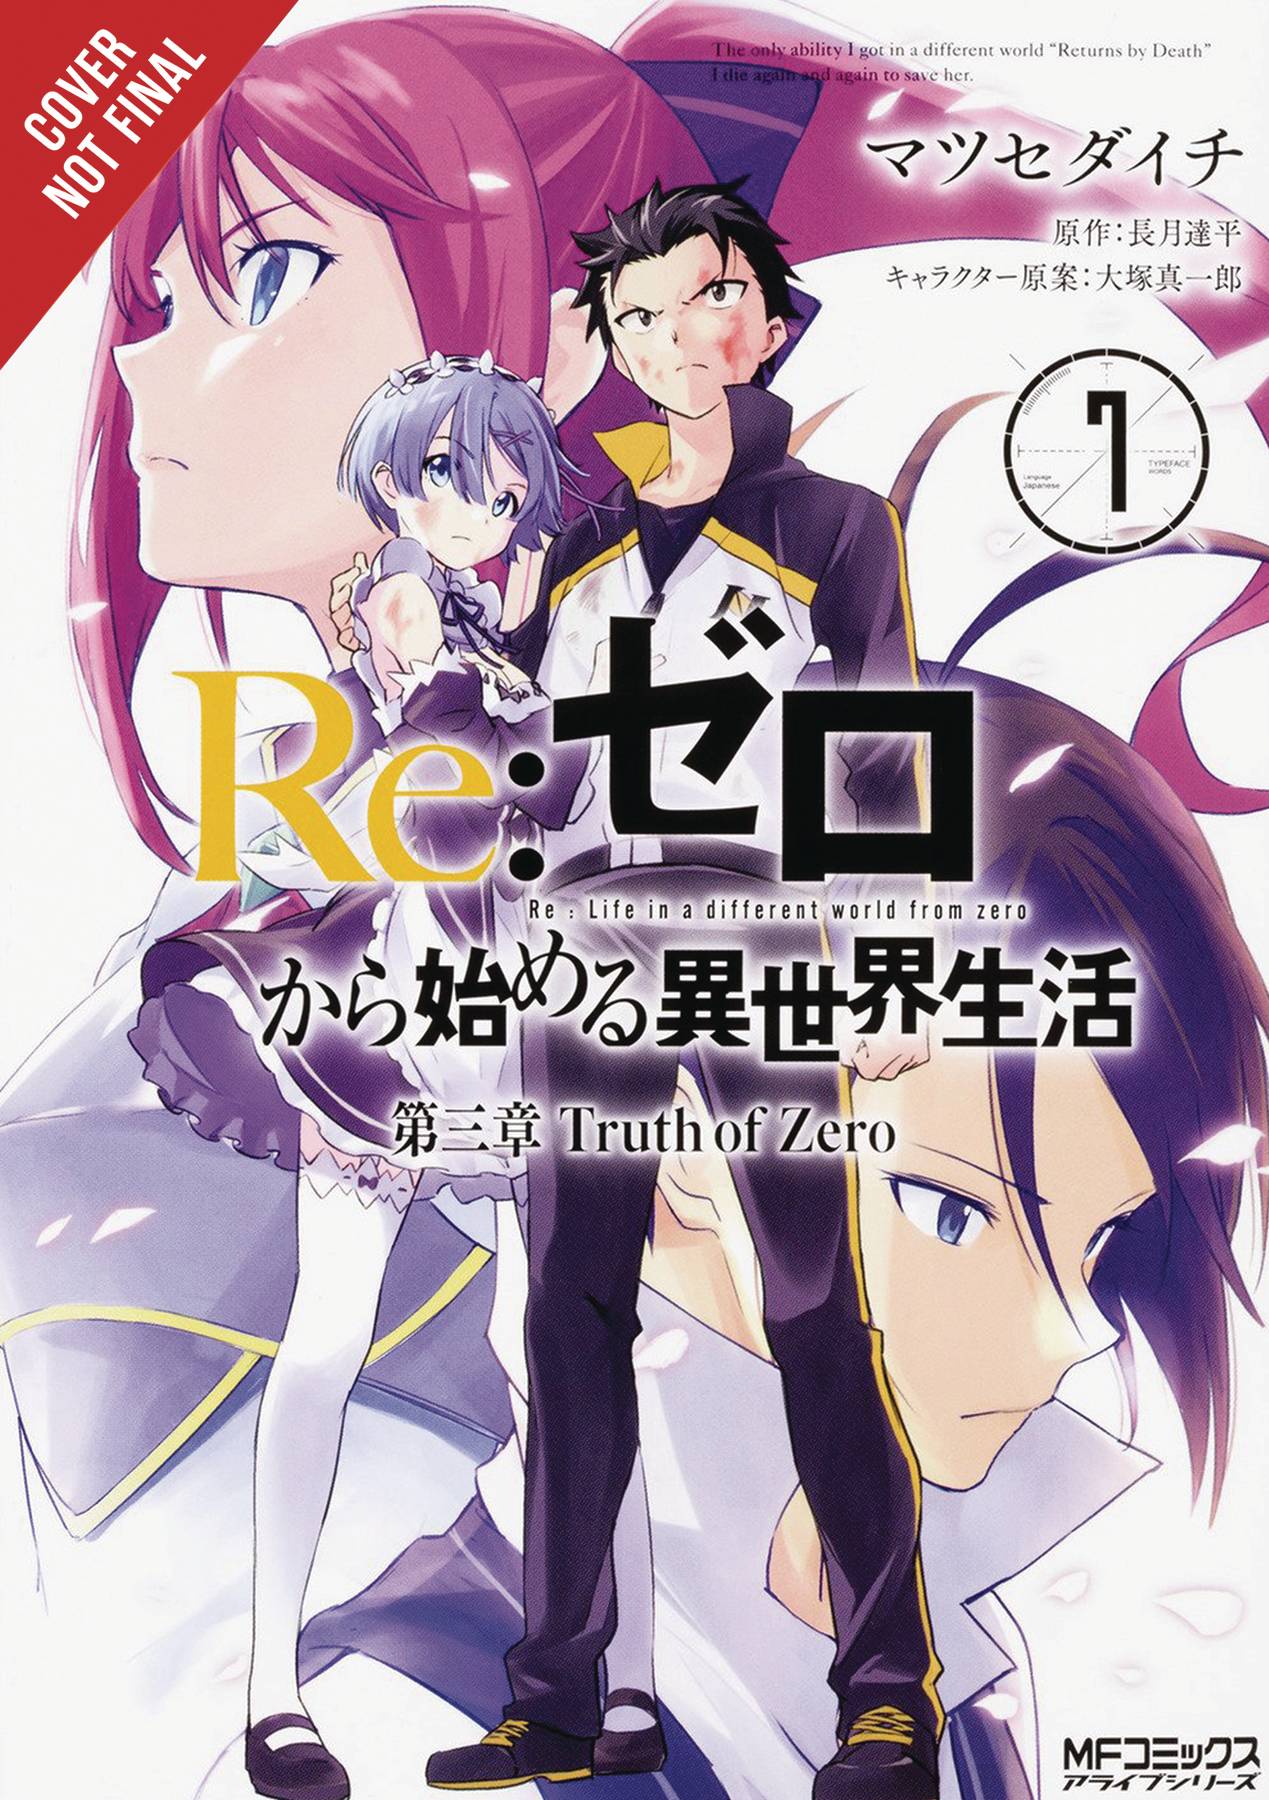  Re:ZERO, Vol. 1 - manga: -Starting Life in Another